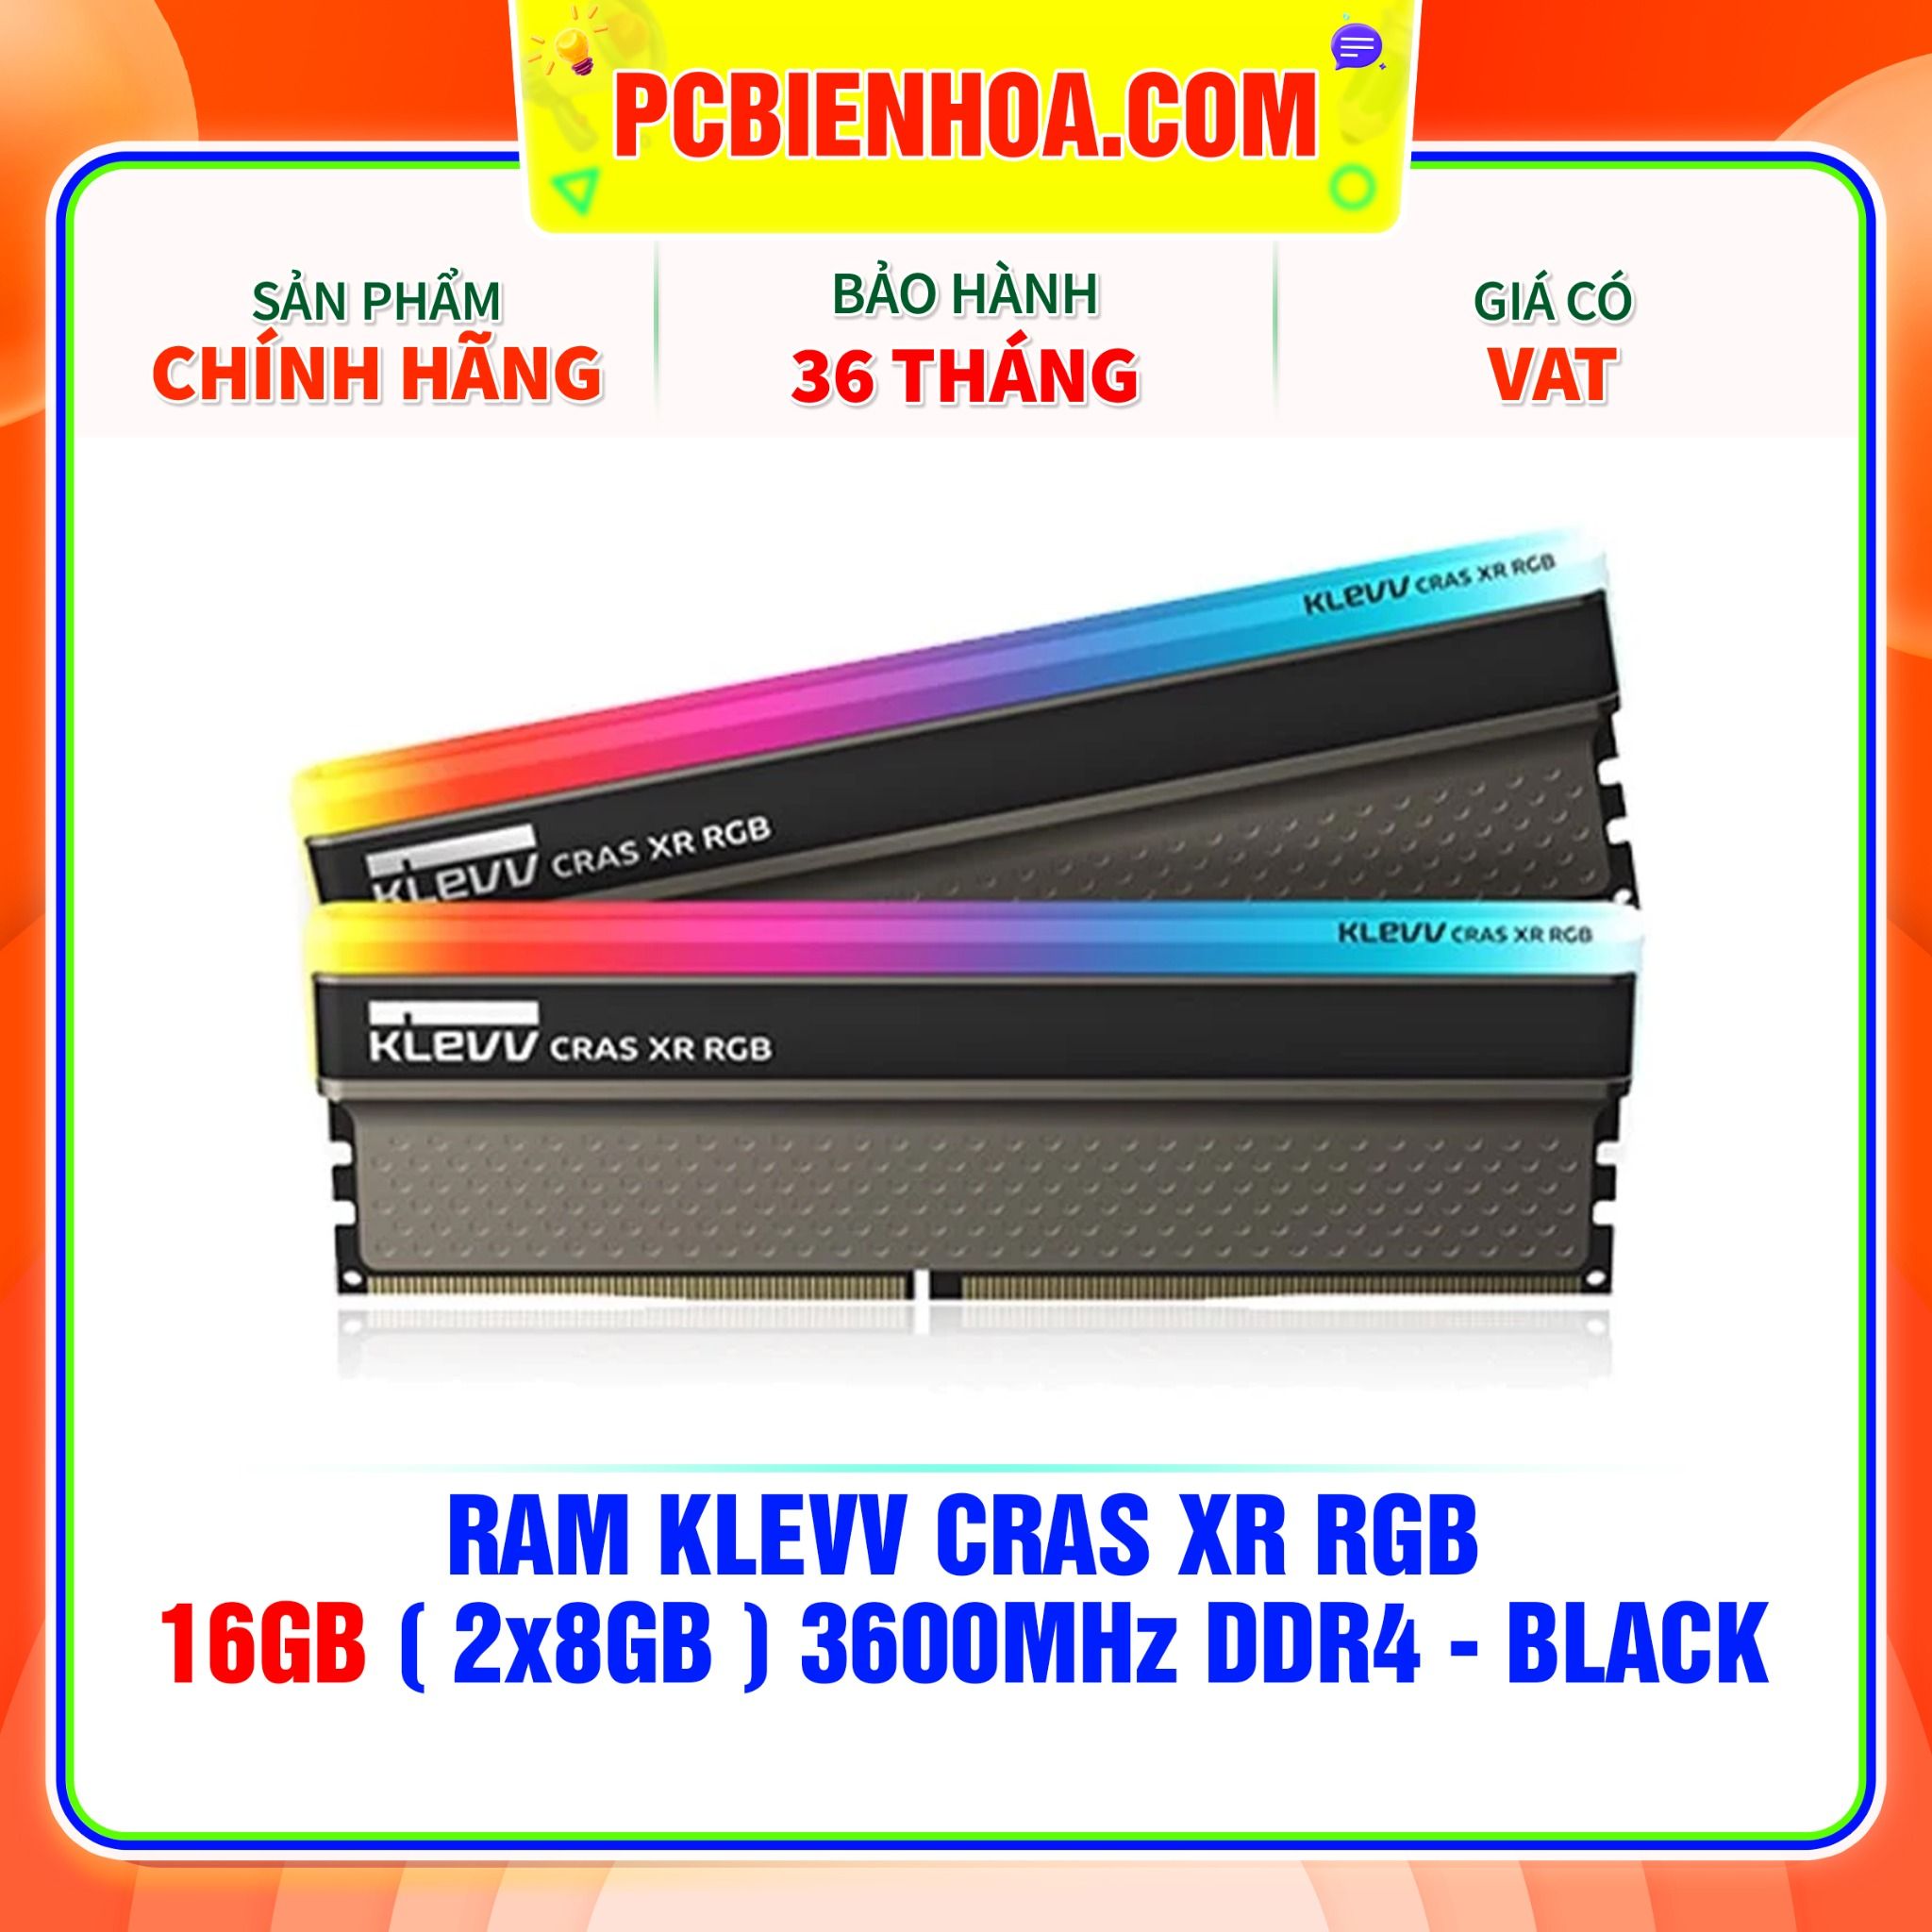  RAM KLEVV CRAS XR RGB 16GB (2x8GB) 3600MHz DDR4 - BLACK 